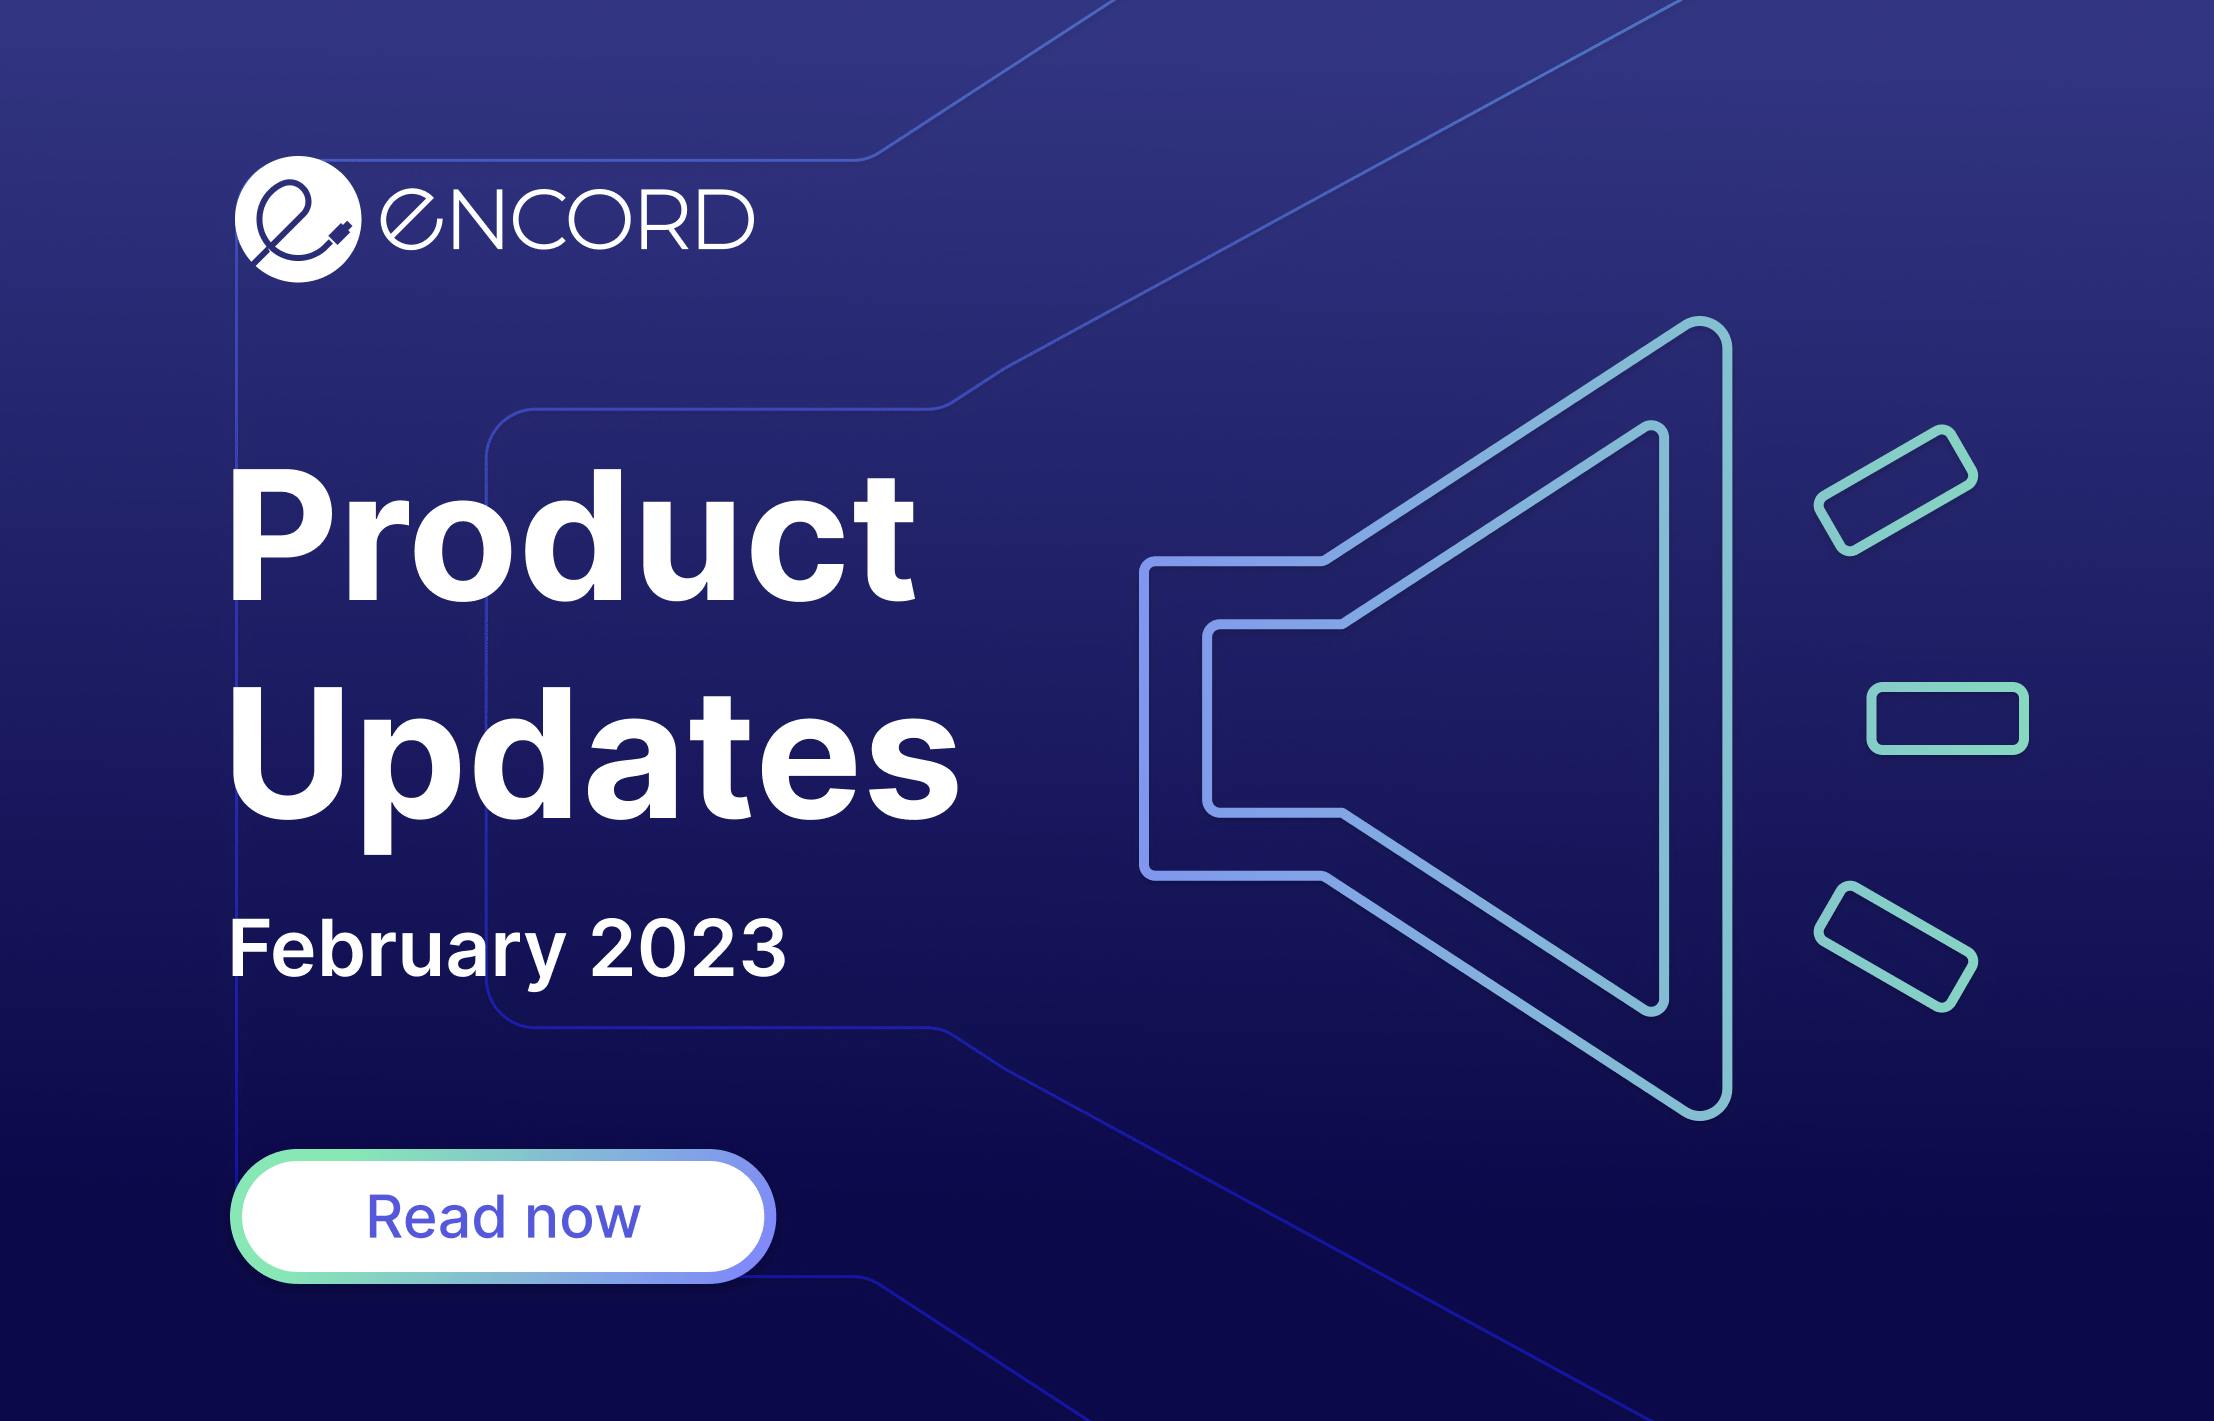 sampleImage_encord-product-updates-february-2023